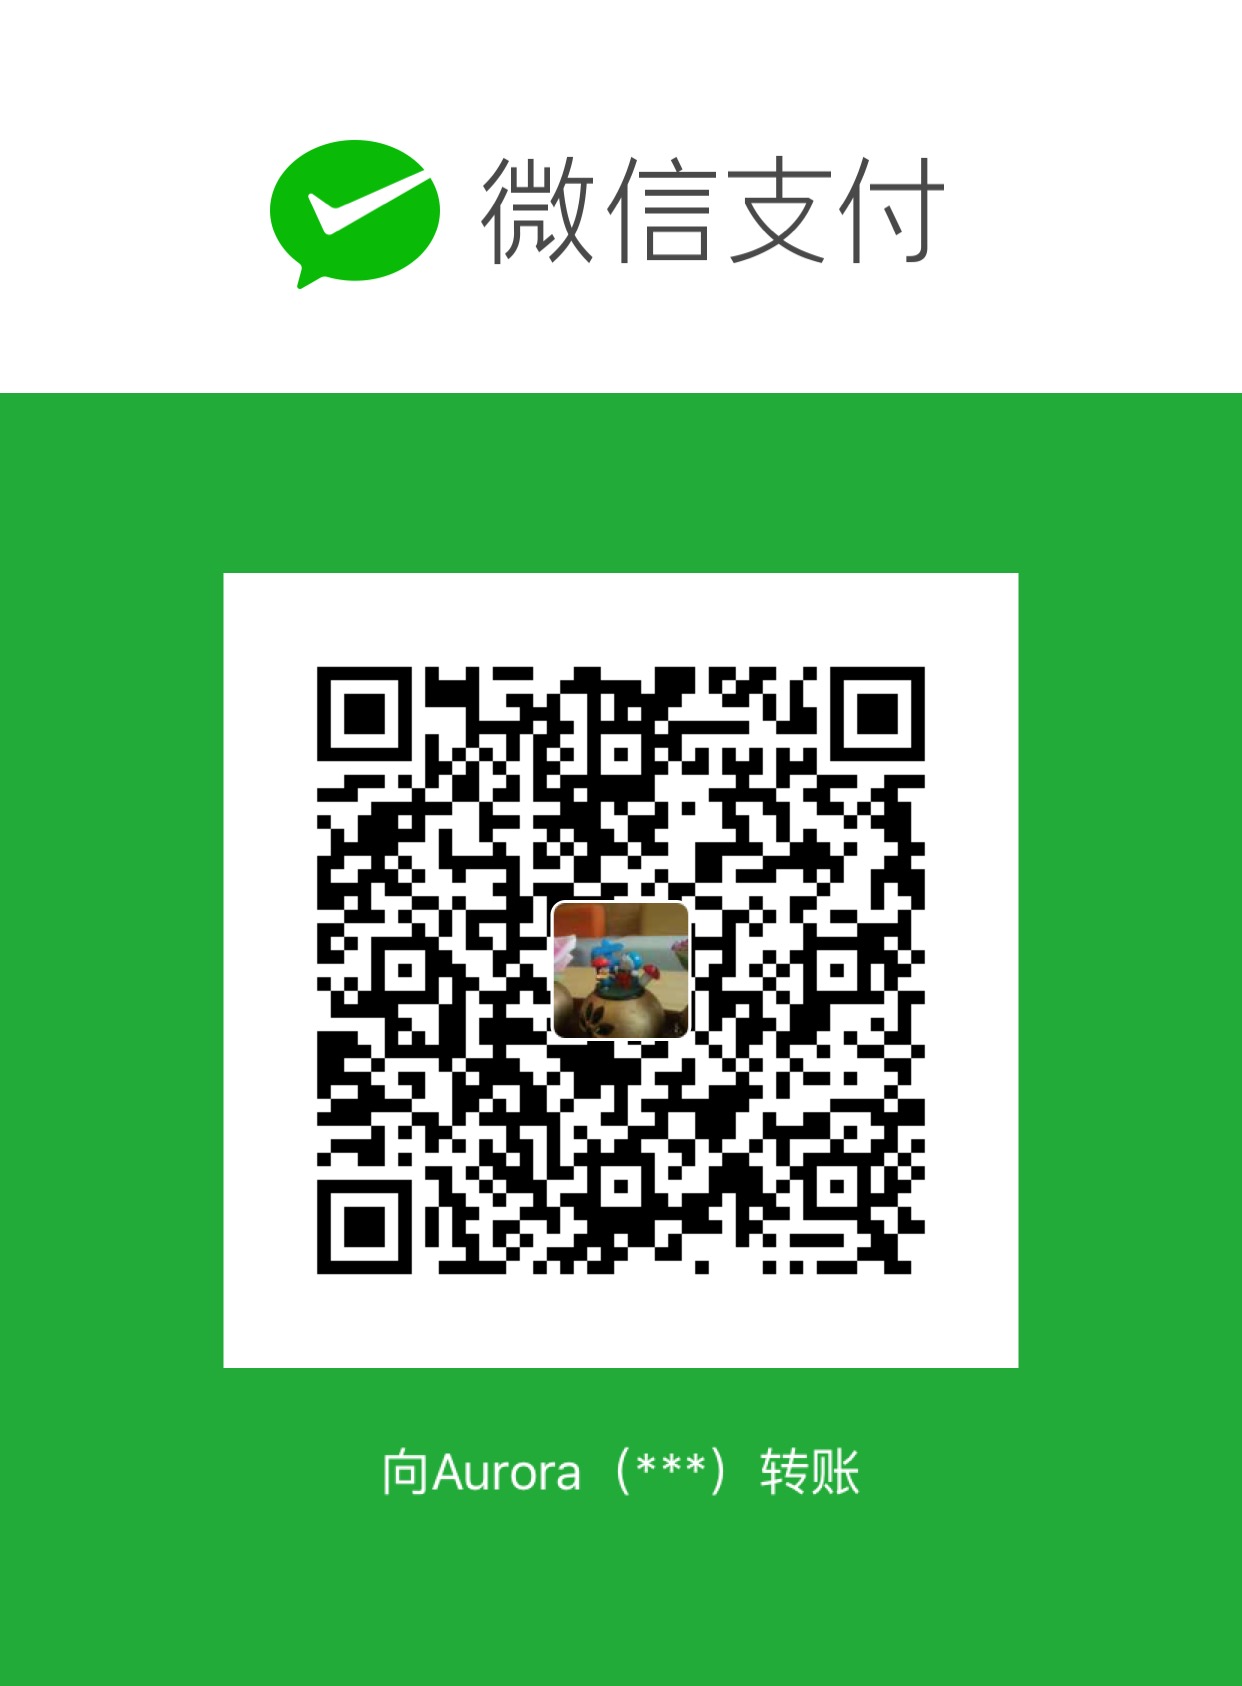 ICELI WeChat Pay